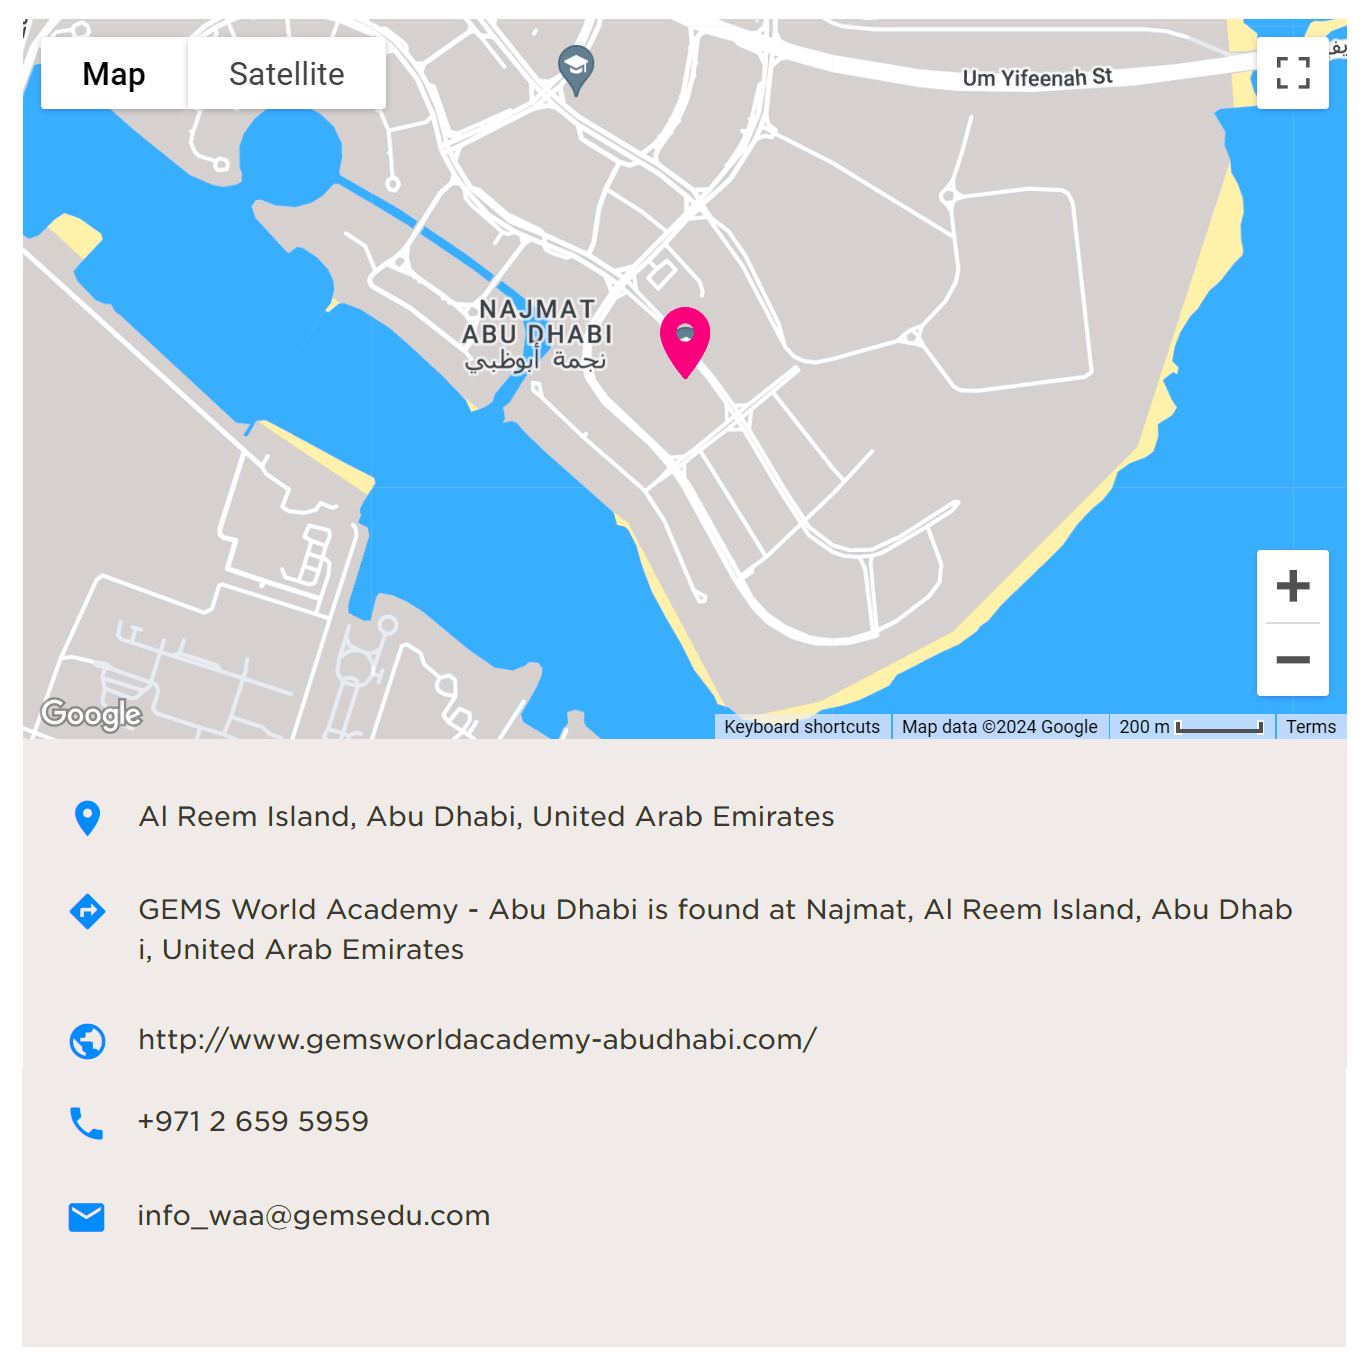 Carte montrant les directions vers la GEMS World Academy Abu Dhabi